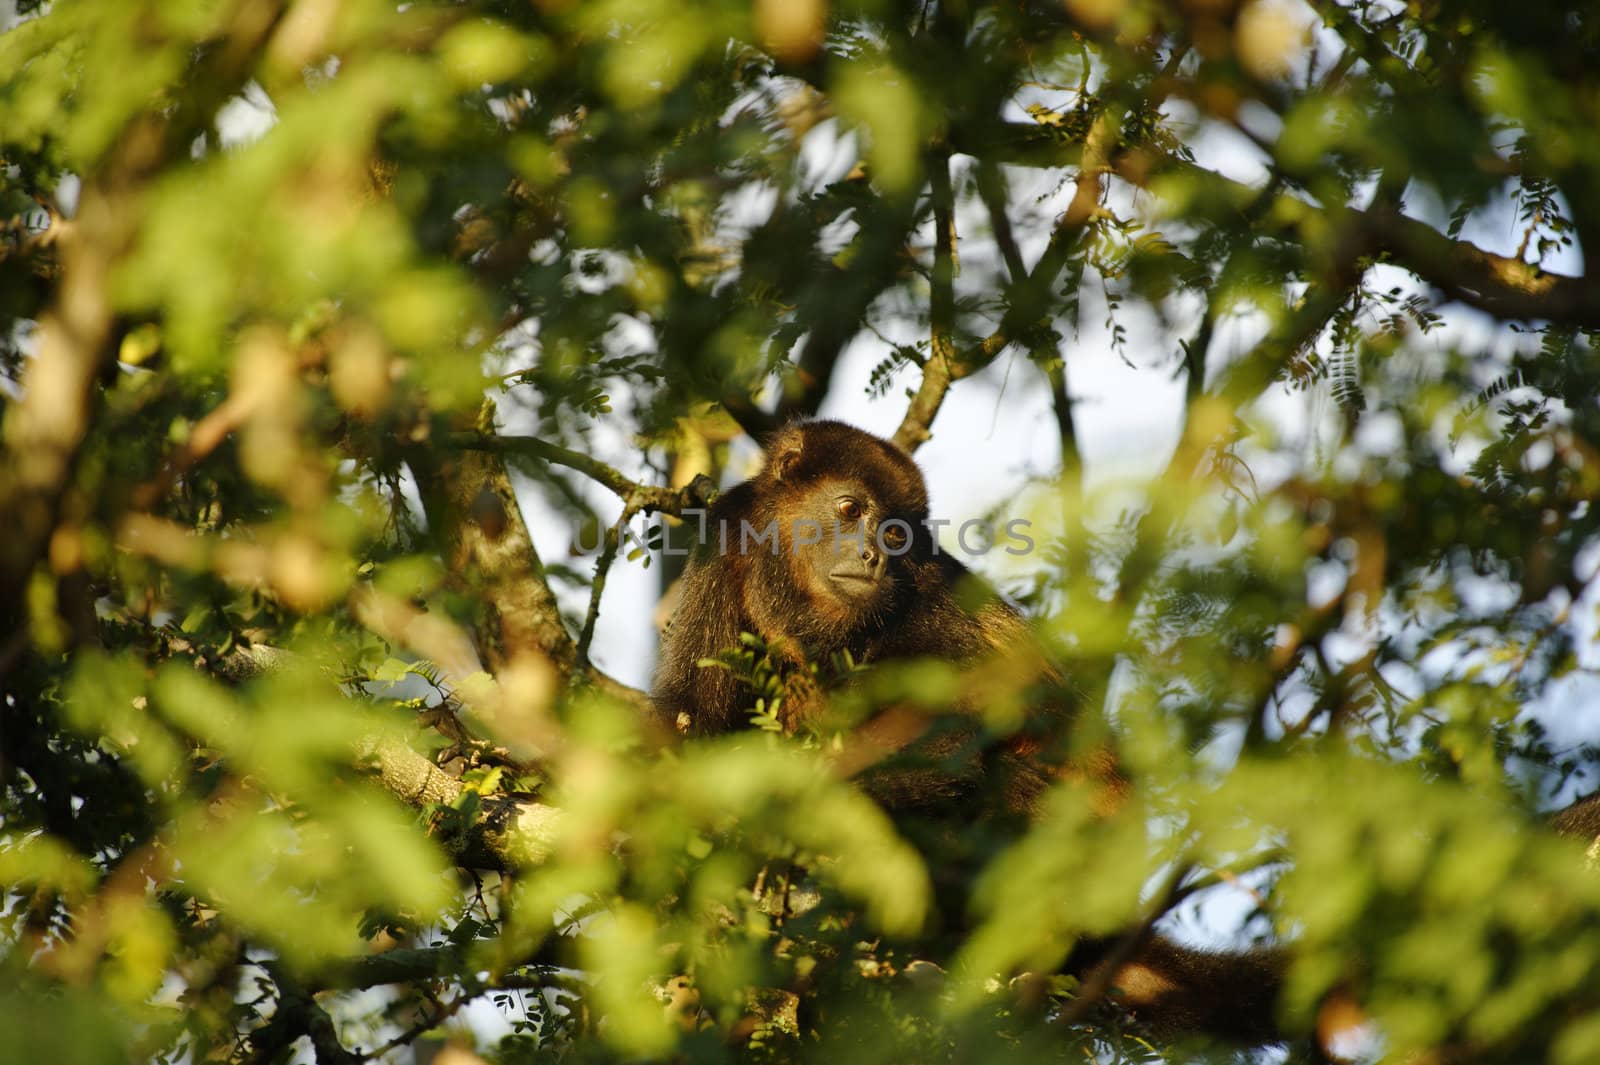 Howler Monkey in a tree at La Ensenada, Costa Rica.